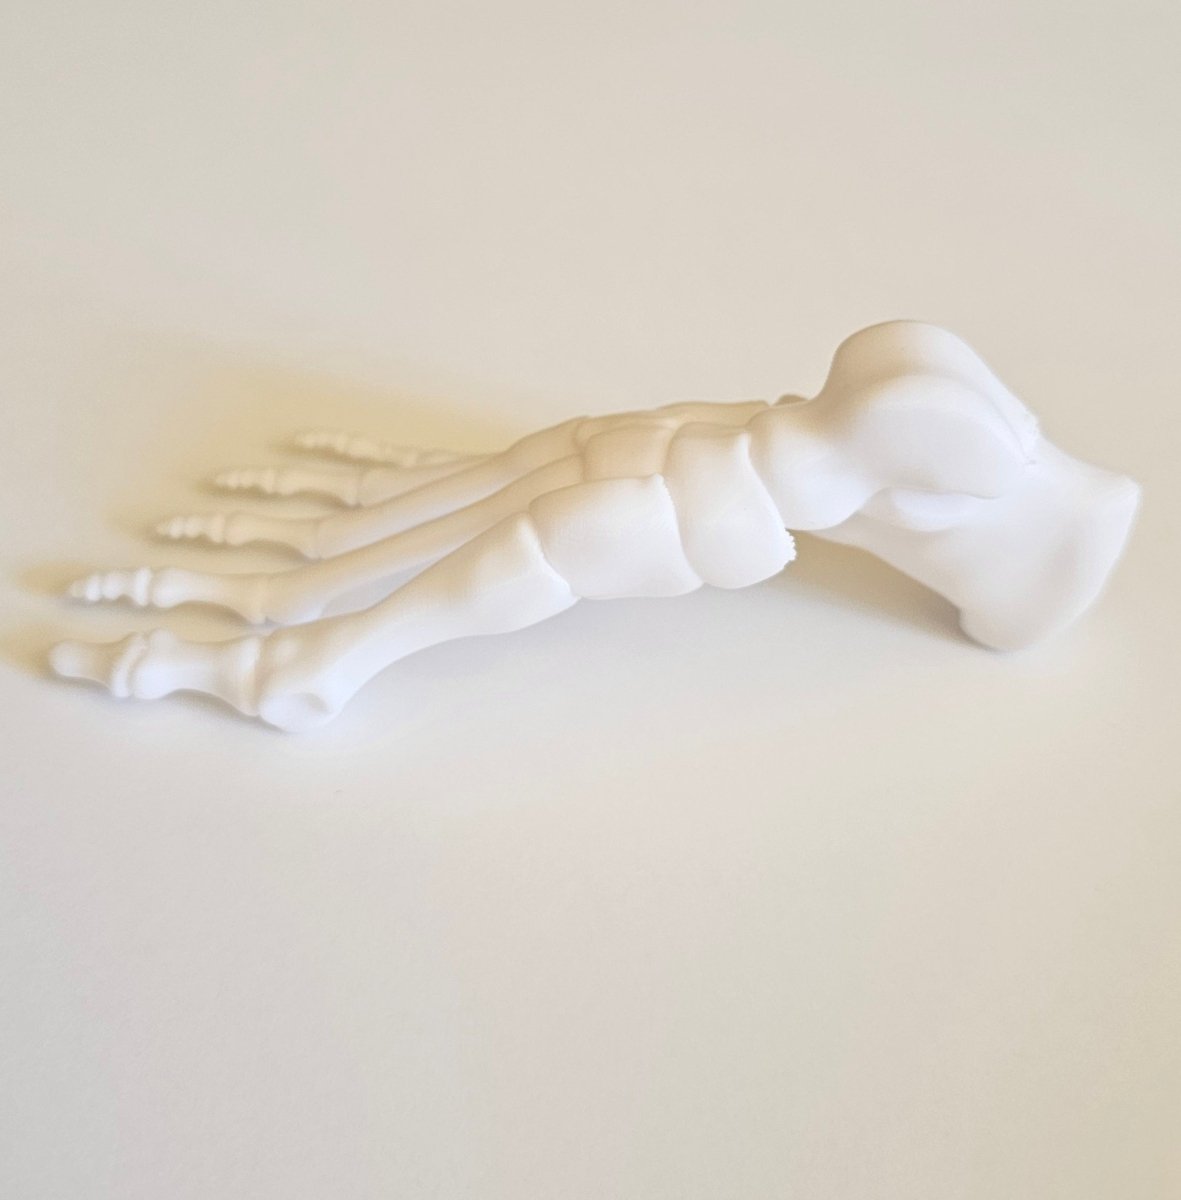 Foot Bones Anatomy 3D Model - Customizable